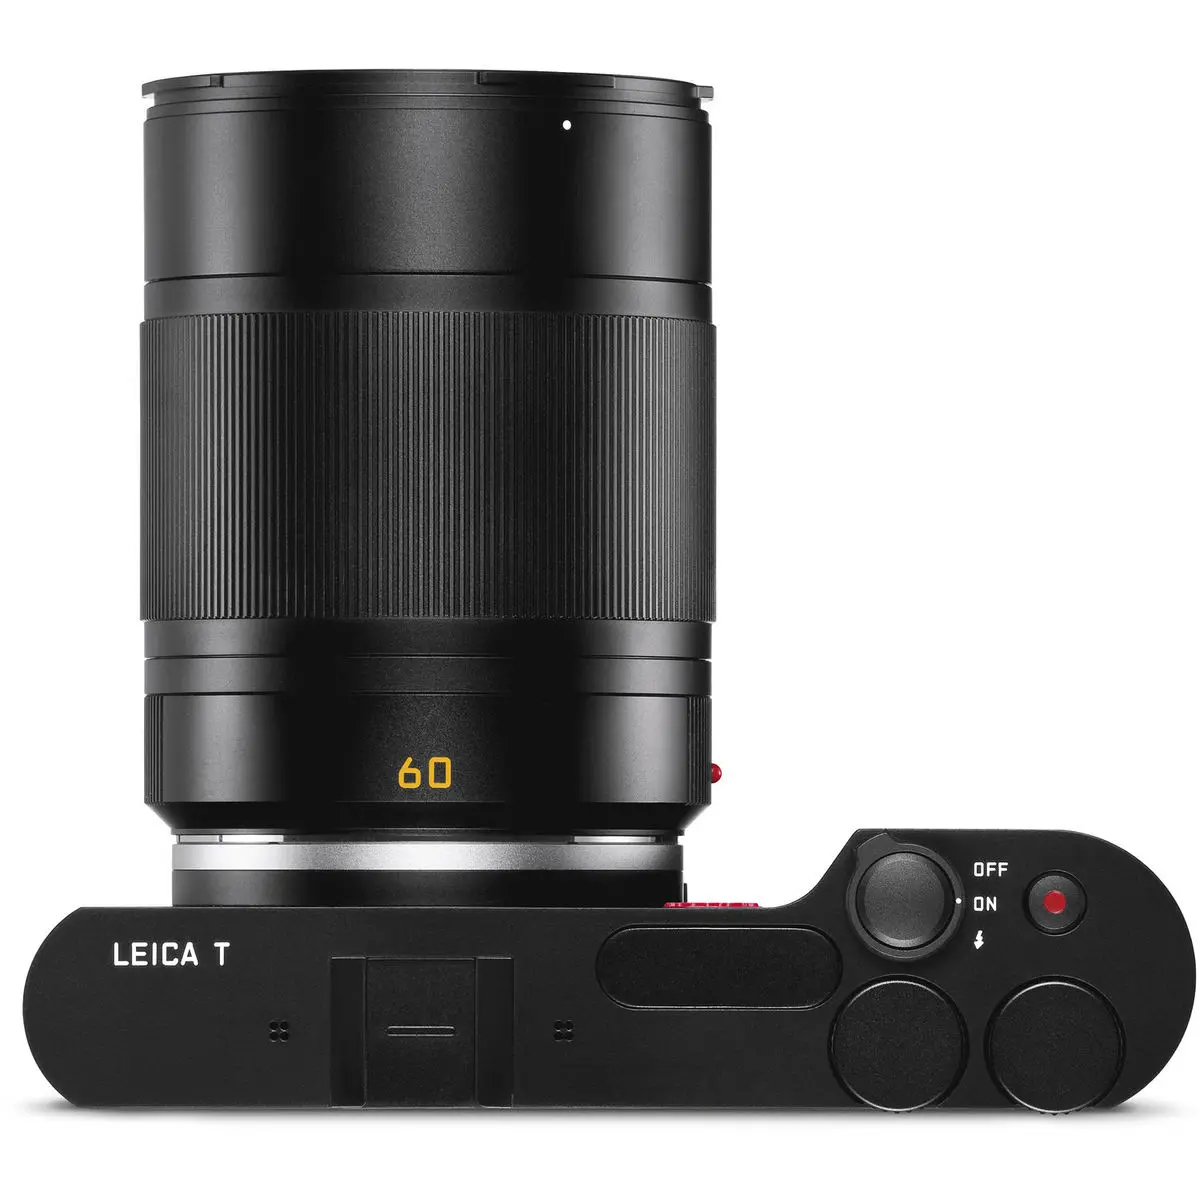 4. Leica APO-Macro-Elmarit-TL 60mm F2.8 ASPH (Black) Lens